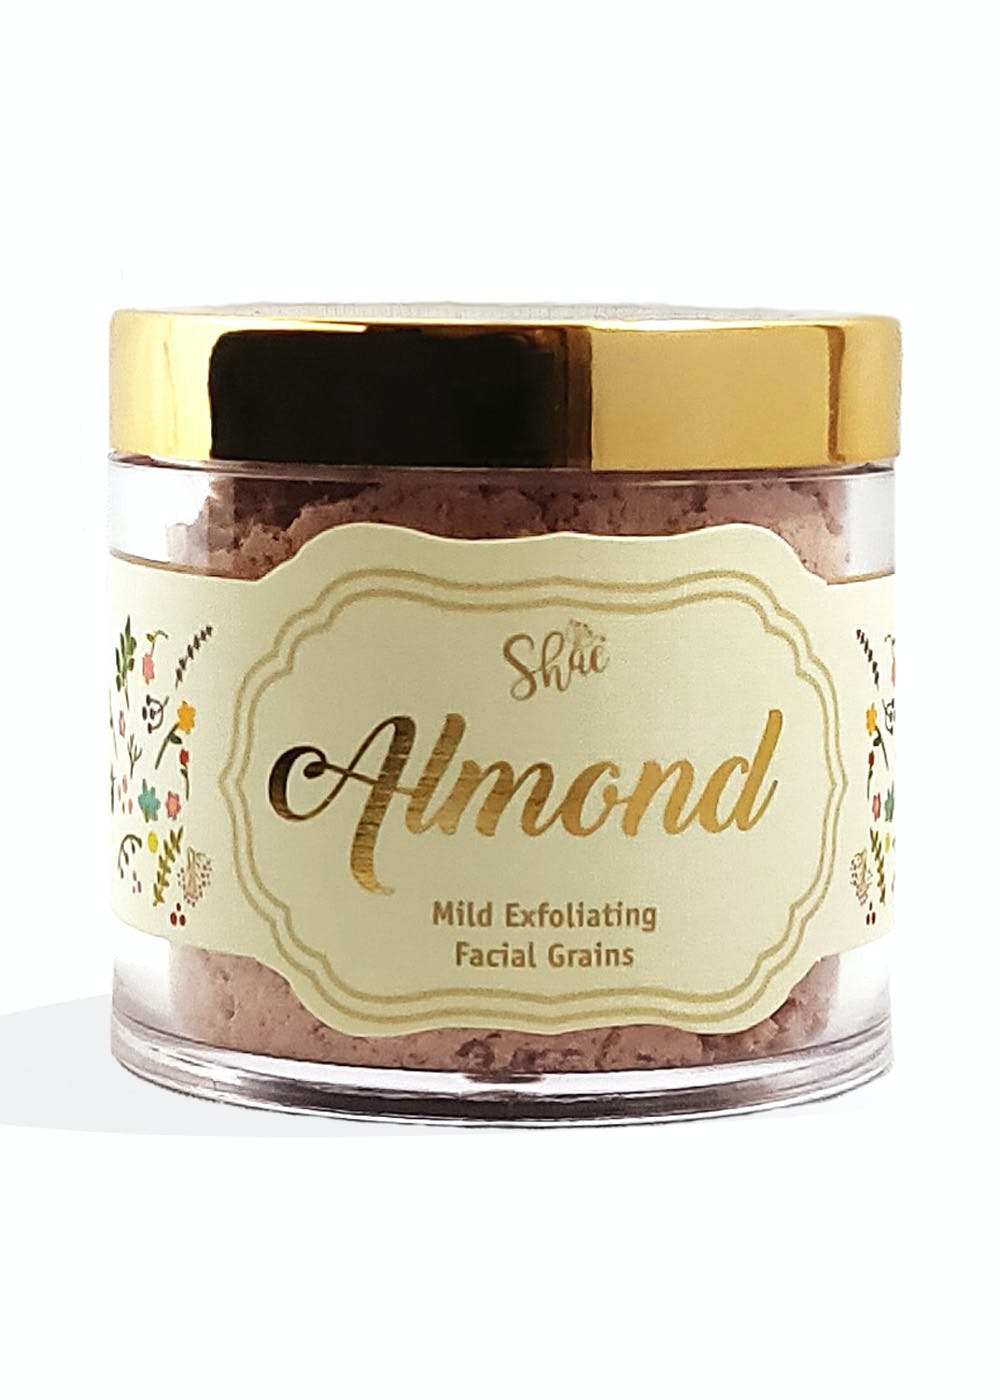 Almond Cleansing Facial Grains